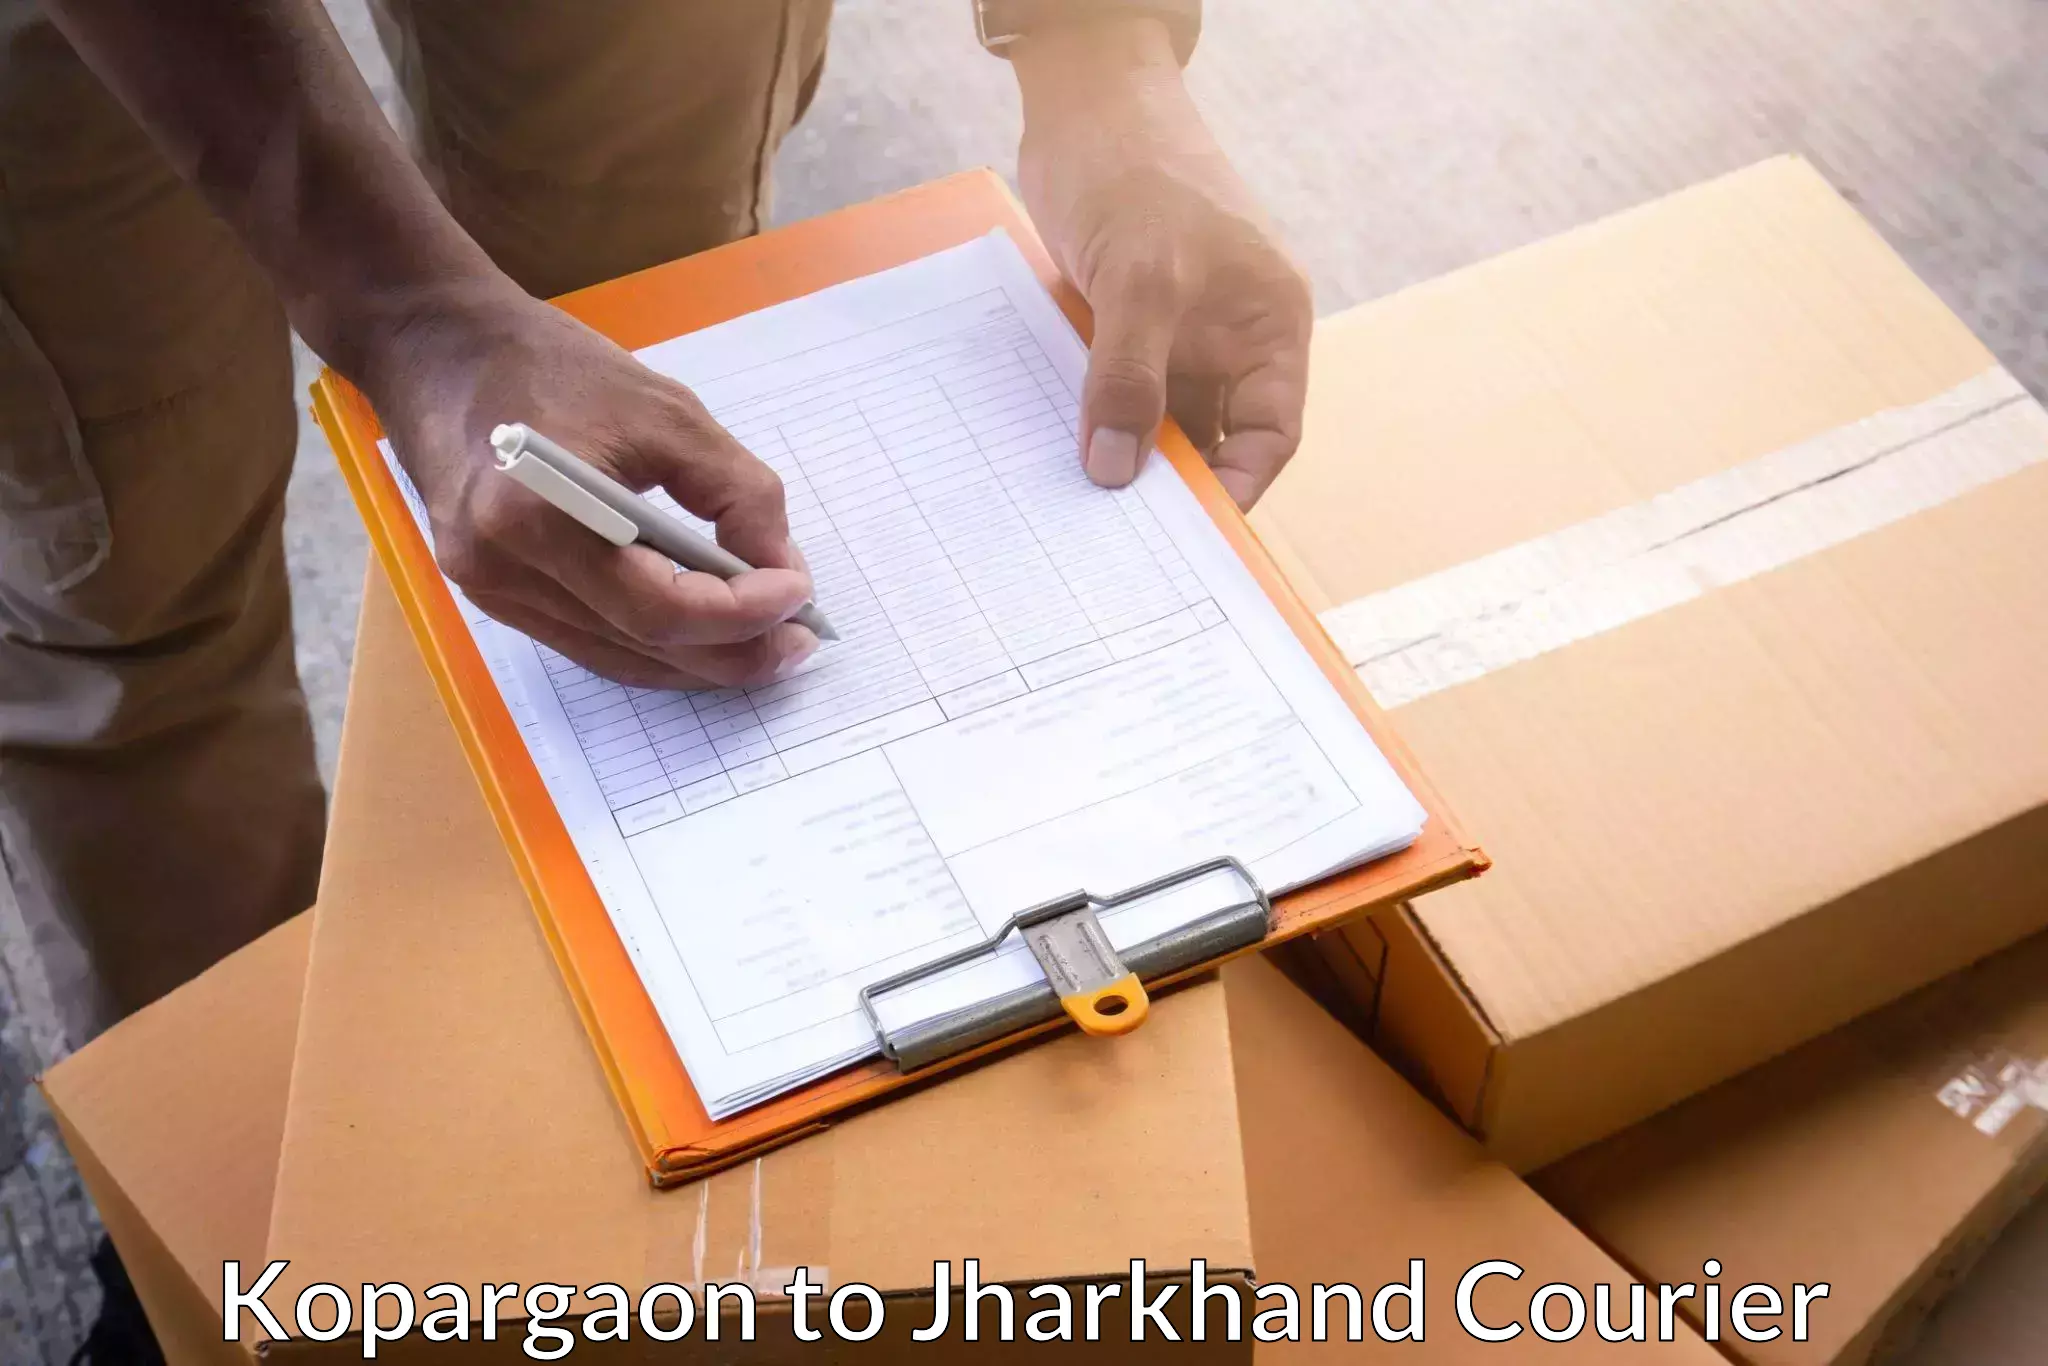 High-speed parcel service Kopargaon to Godabar Chatra